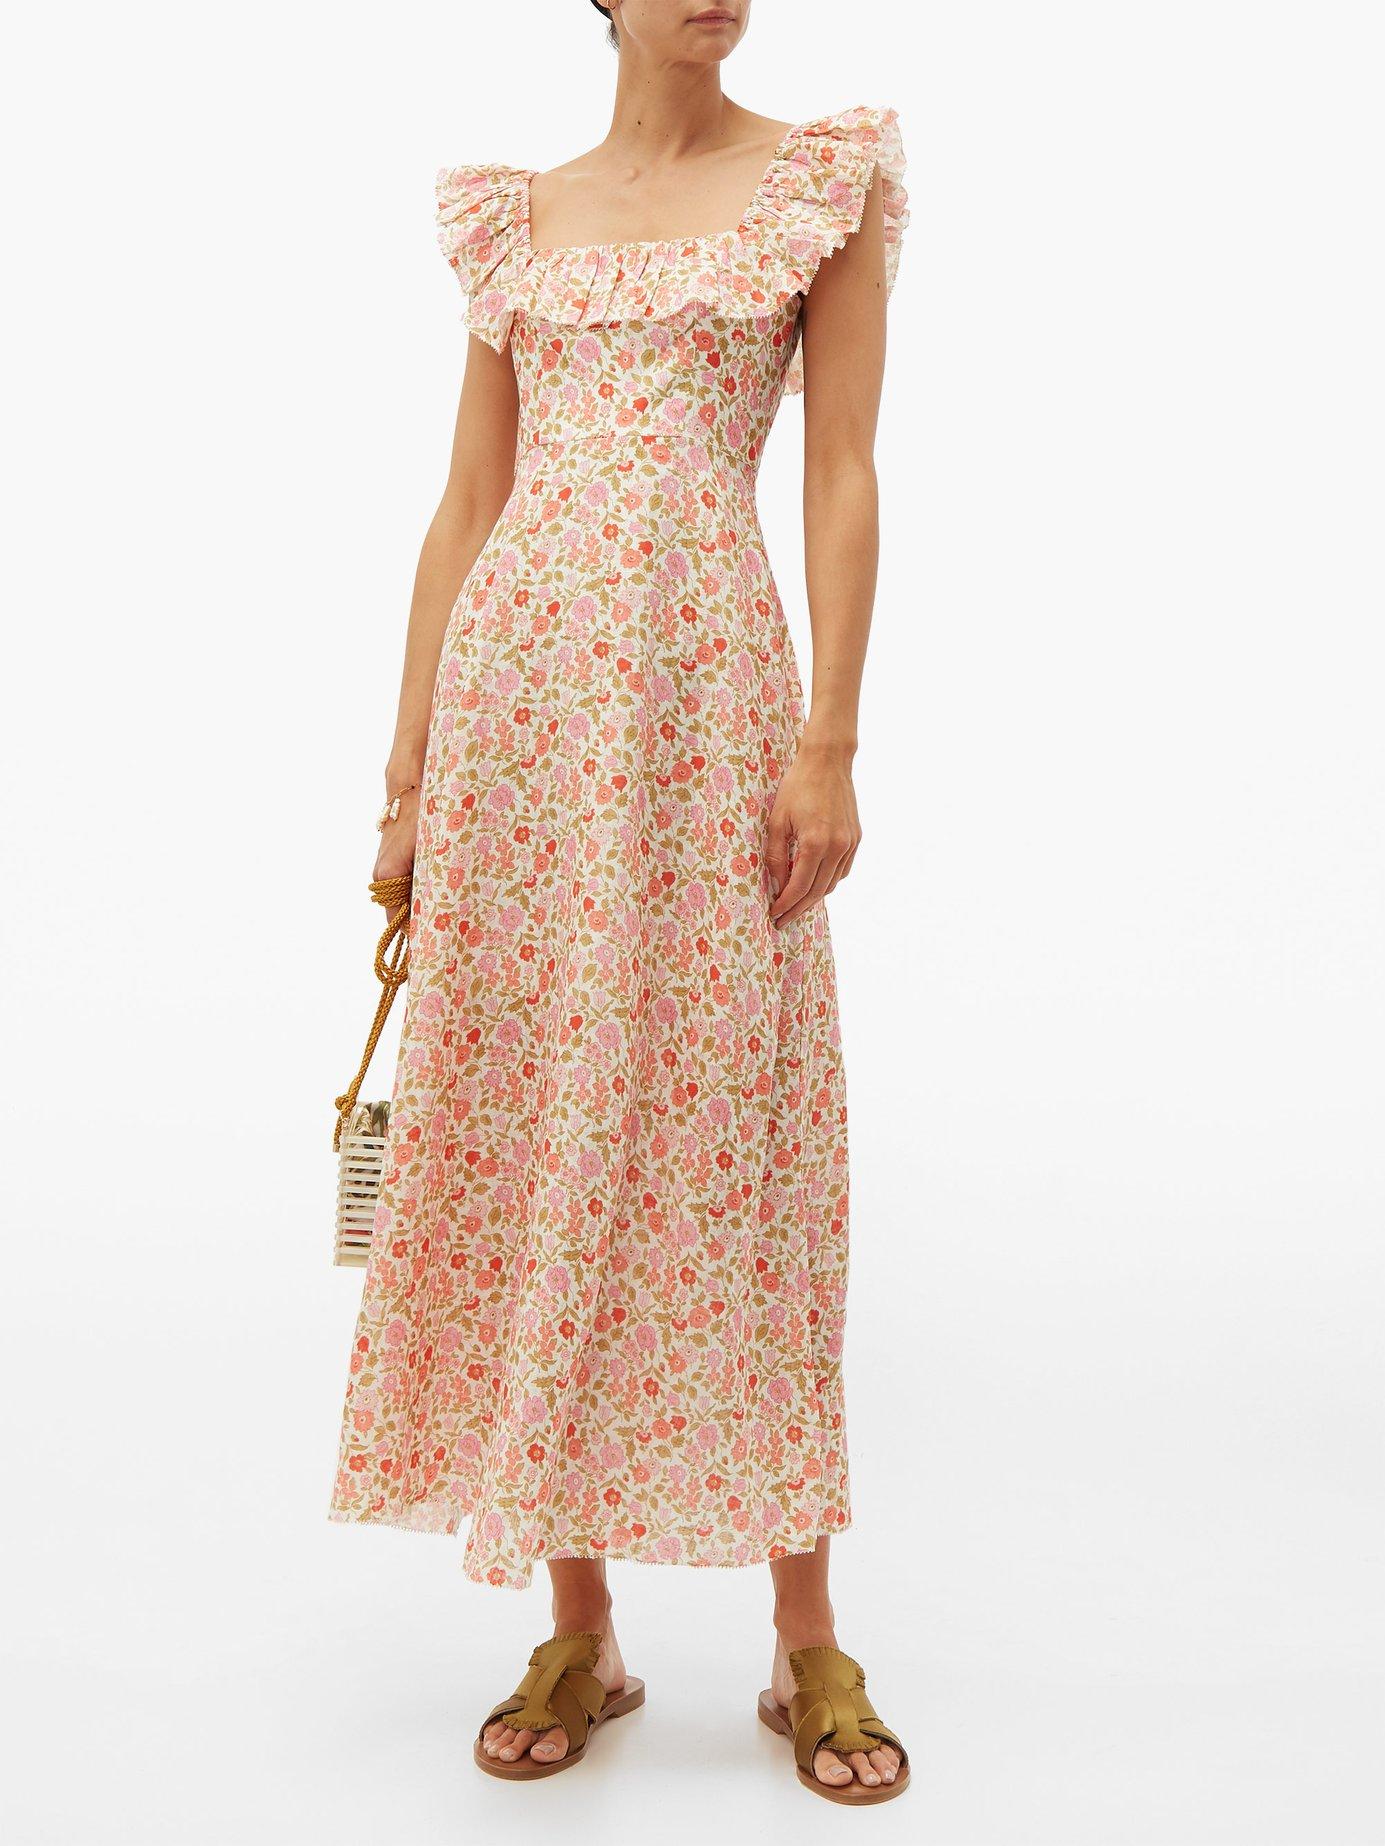 Zimmermann Goldie Floral Print Linen Maxi Dress in Pink - Lyst